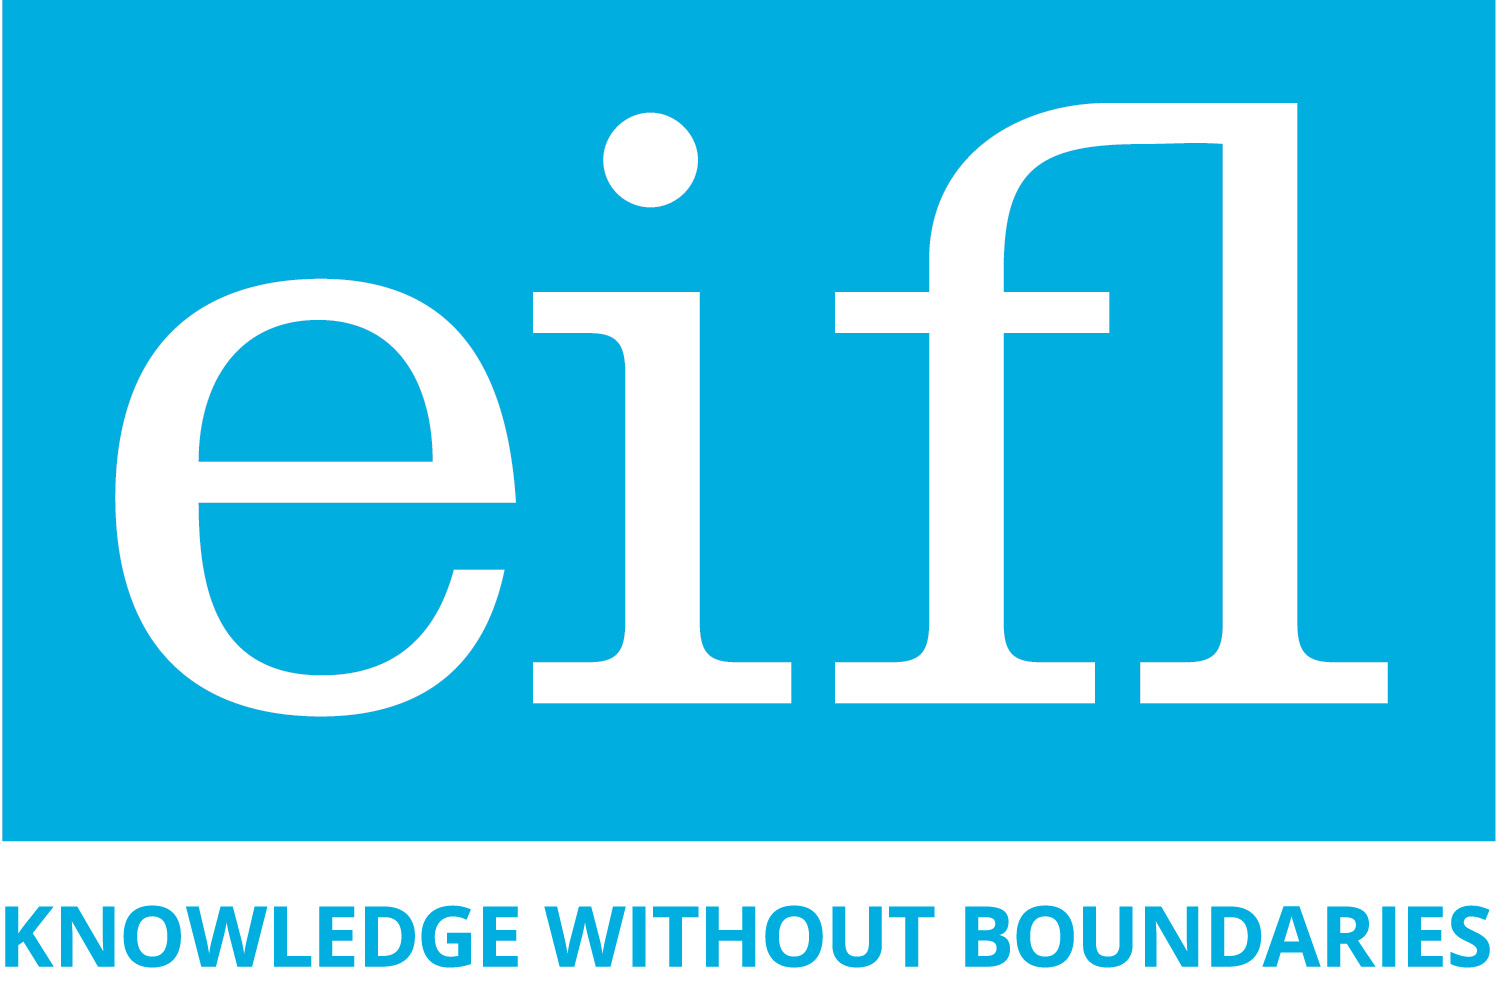 EIFL logo